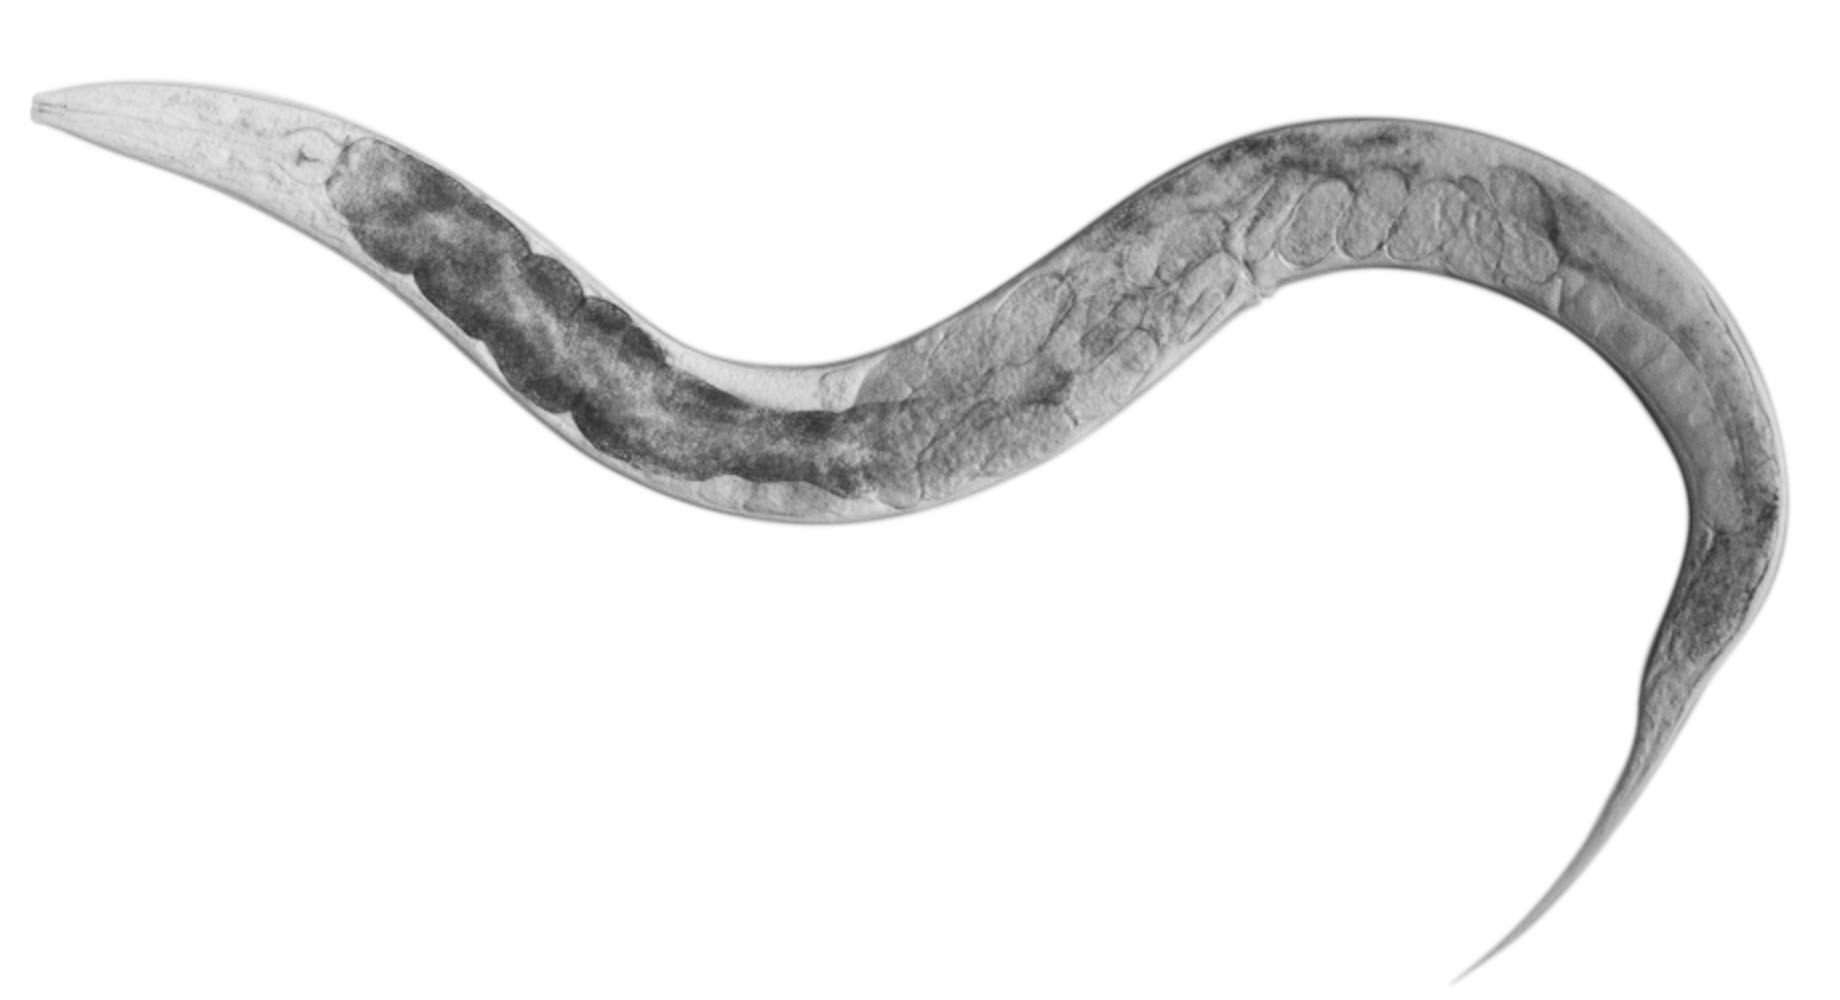 c. elegans worm